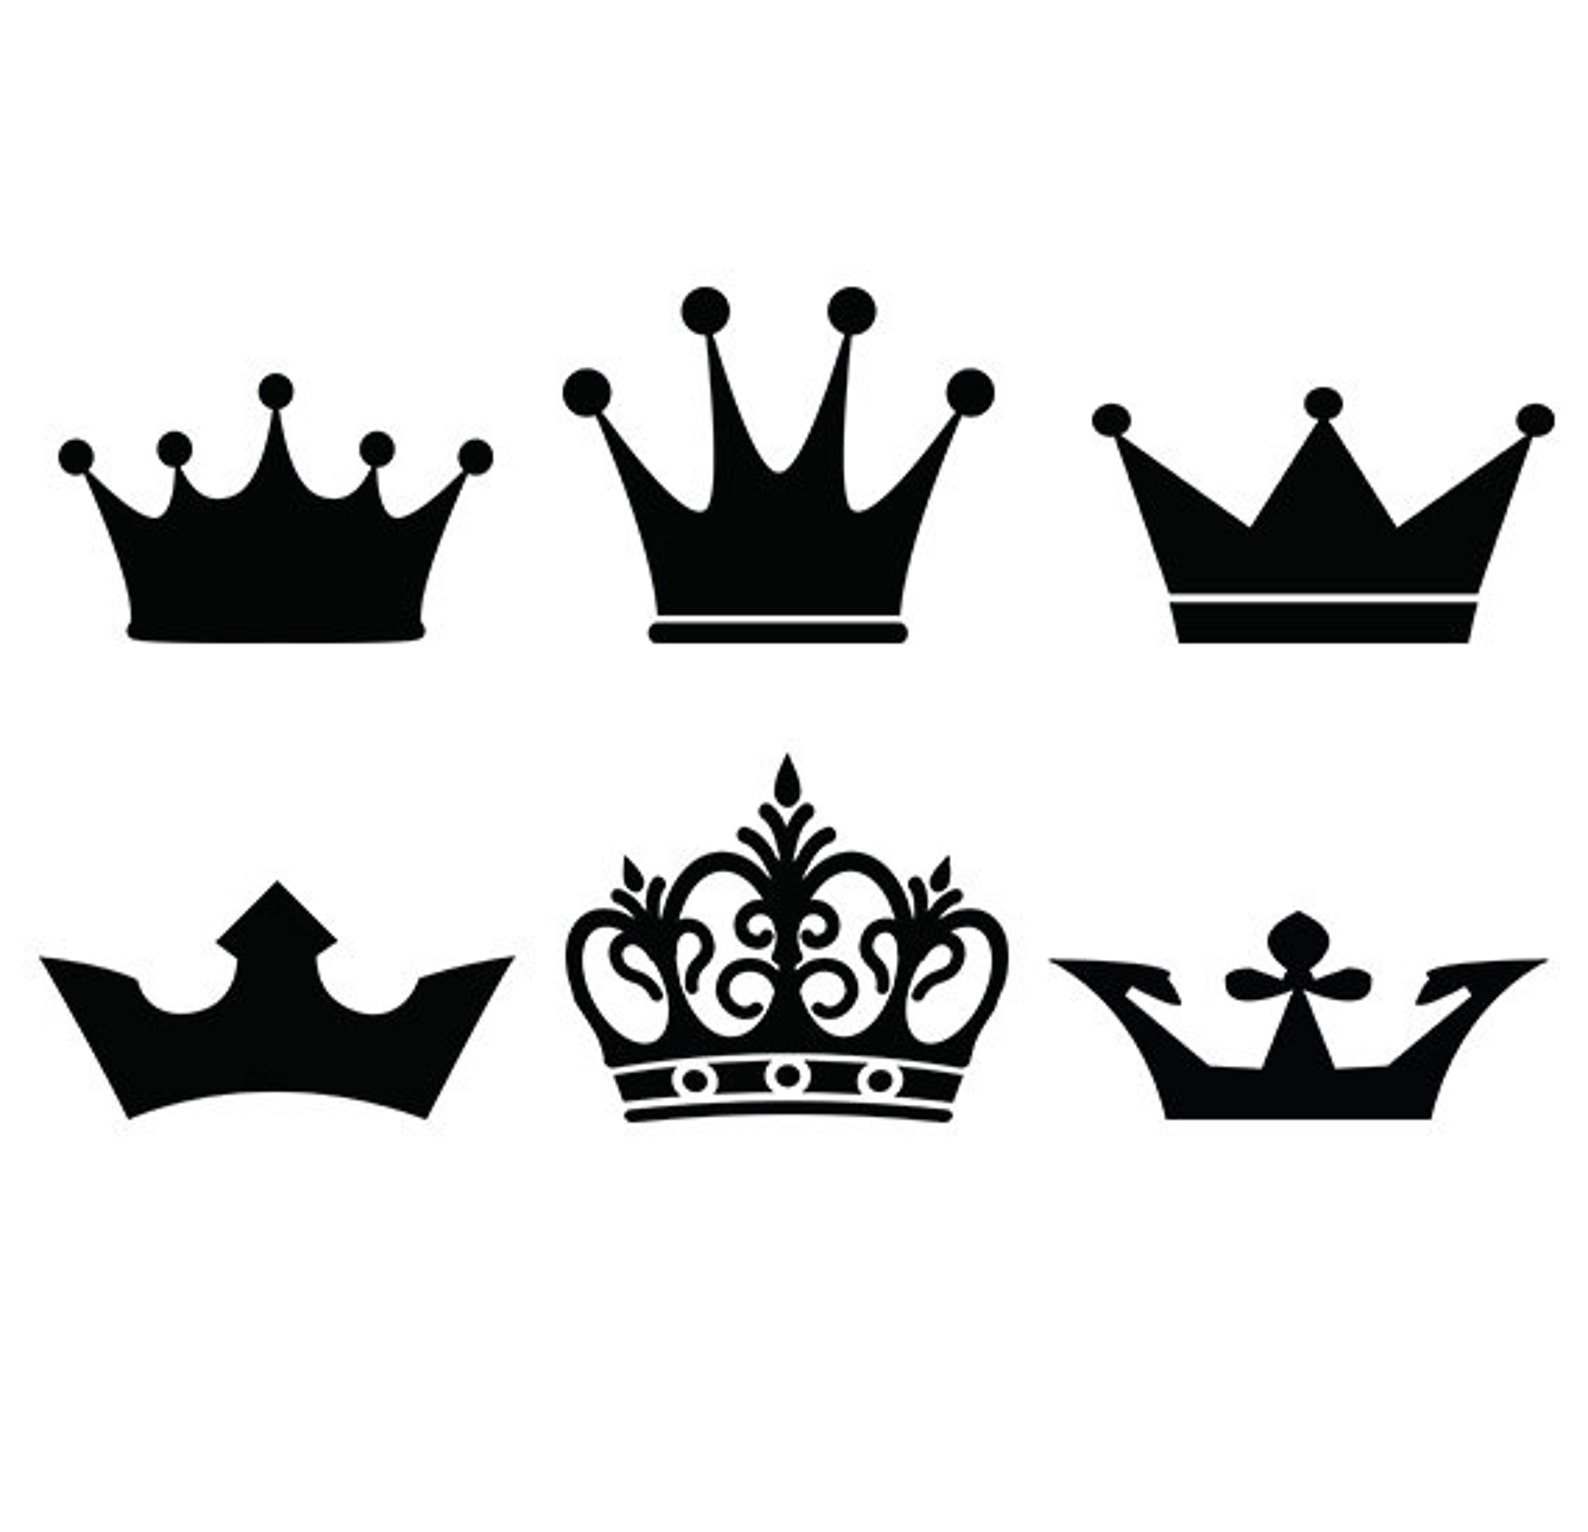 символ корона для ников пабг фото 112